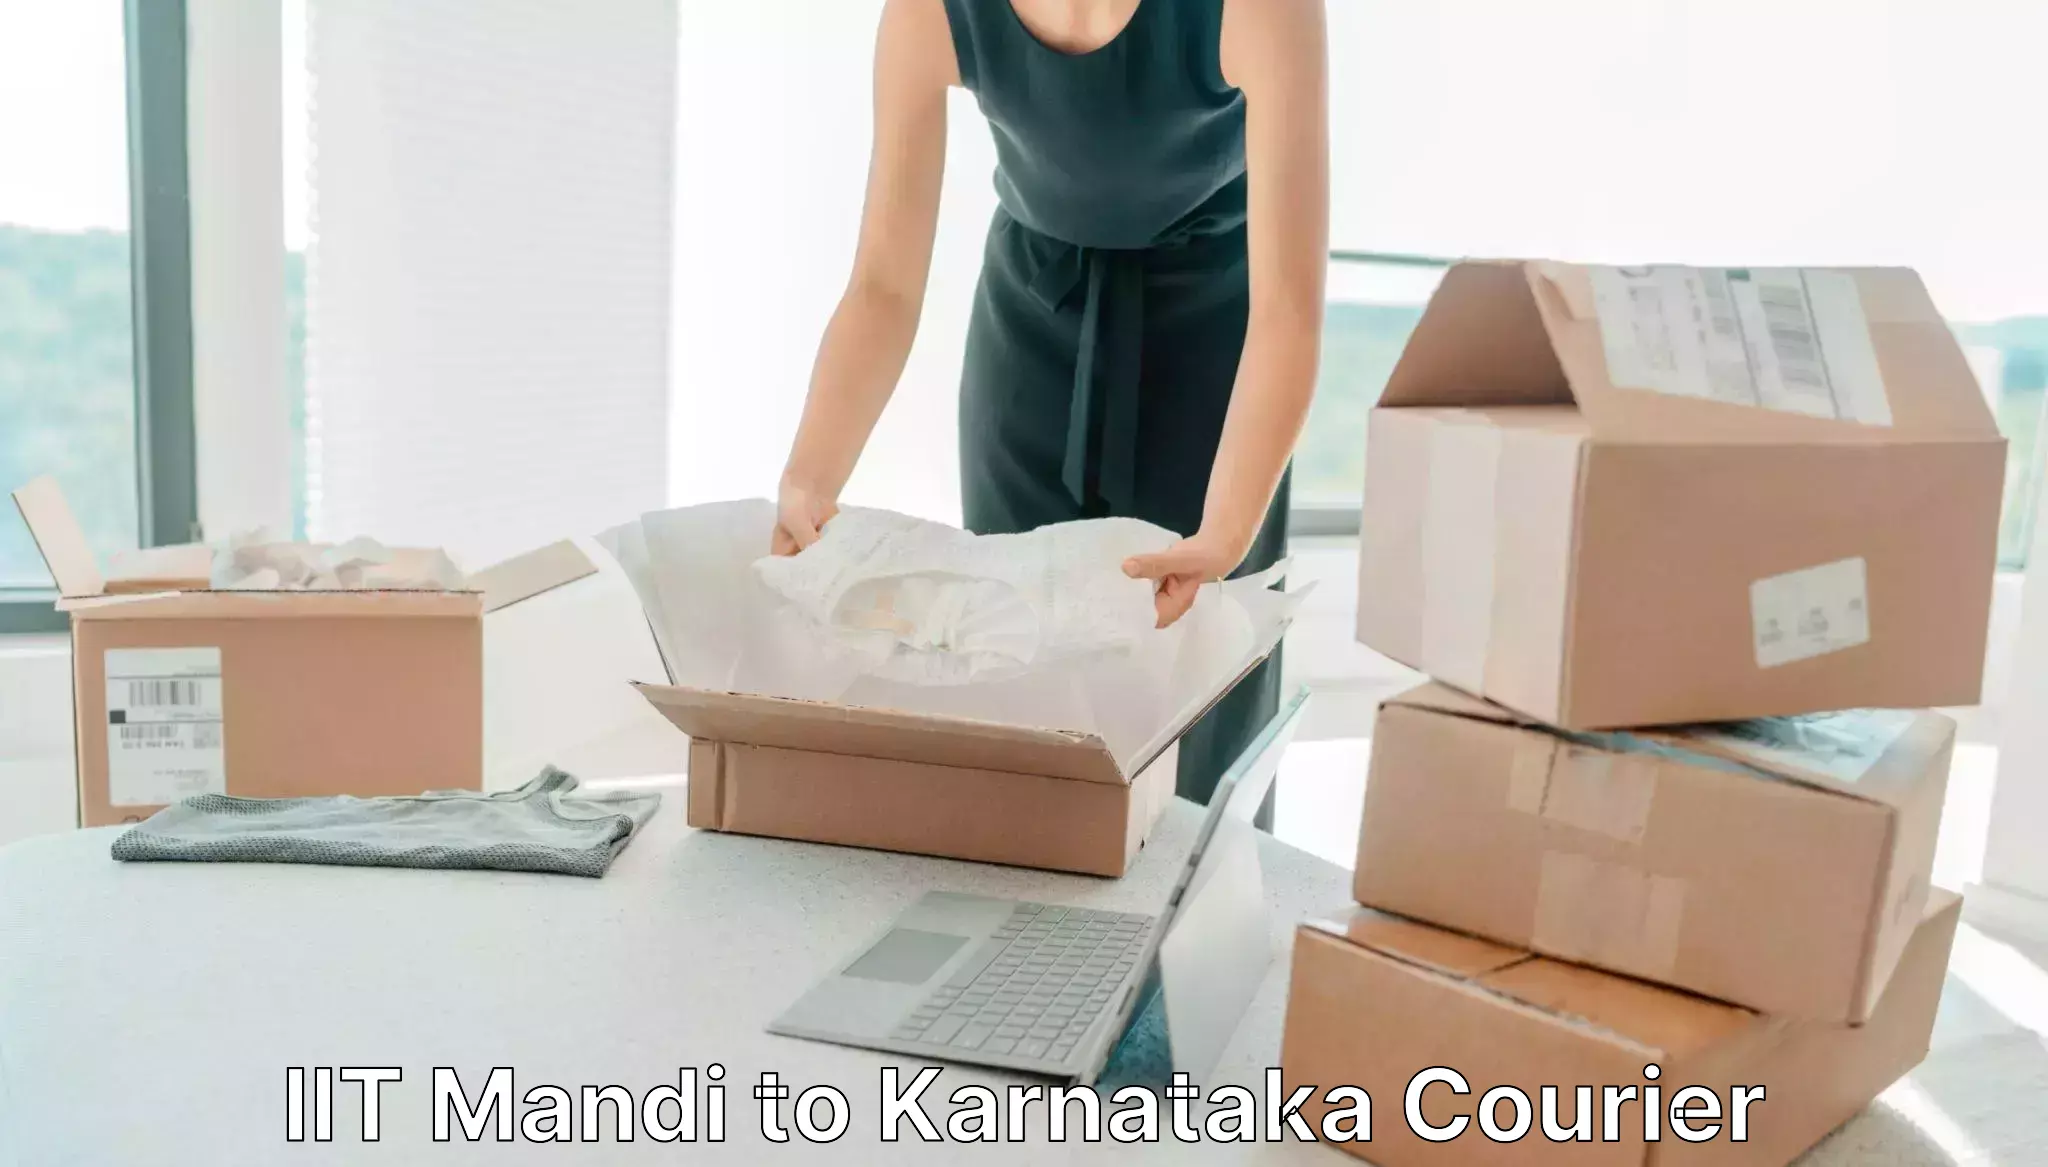 Express delivery network IIT Mandi to Karnataka